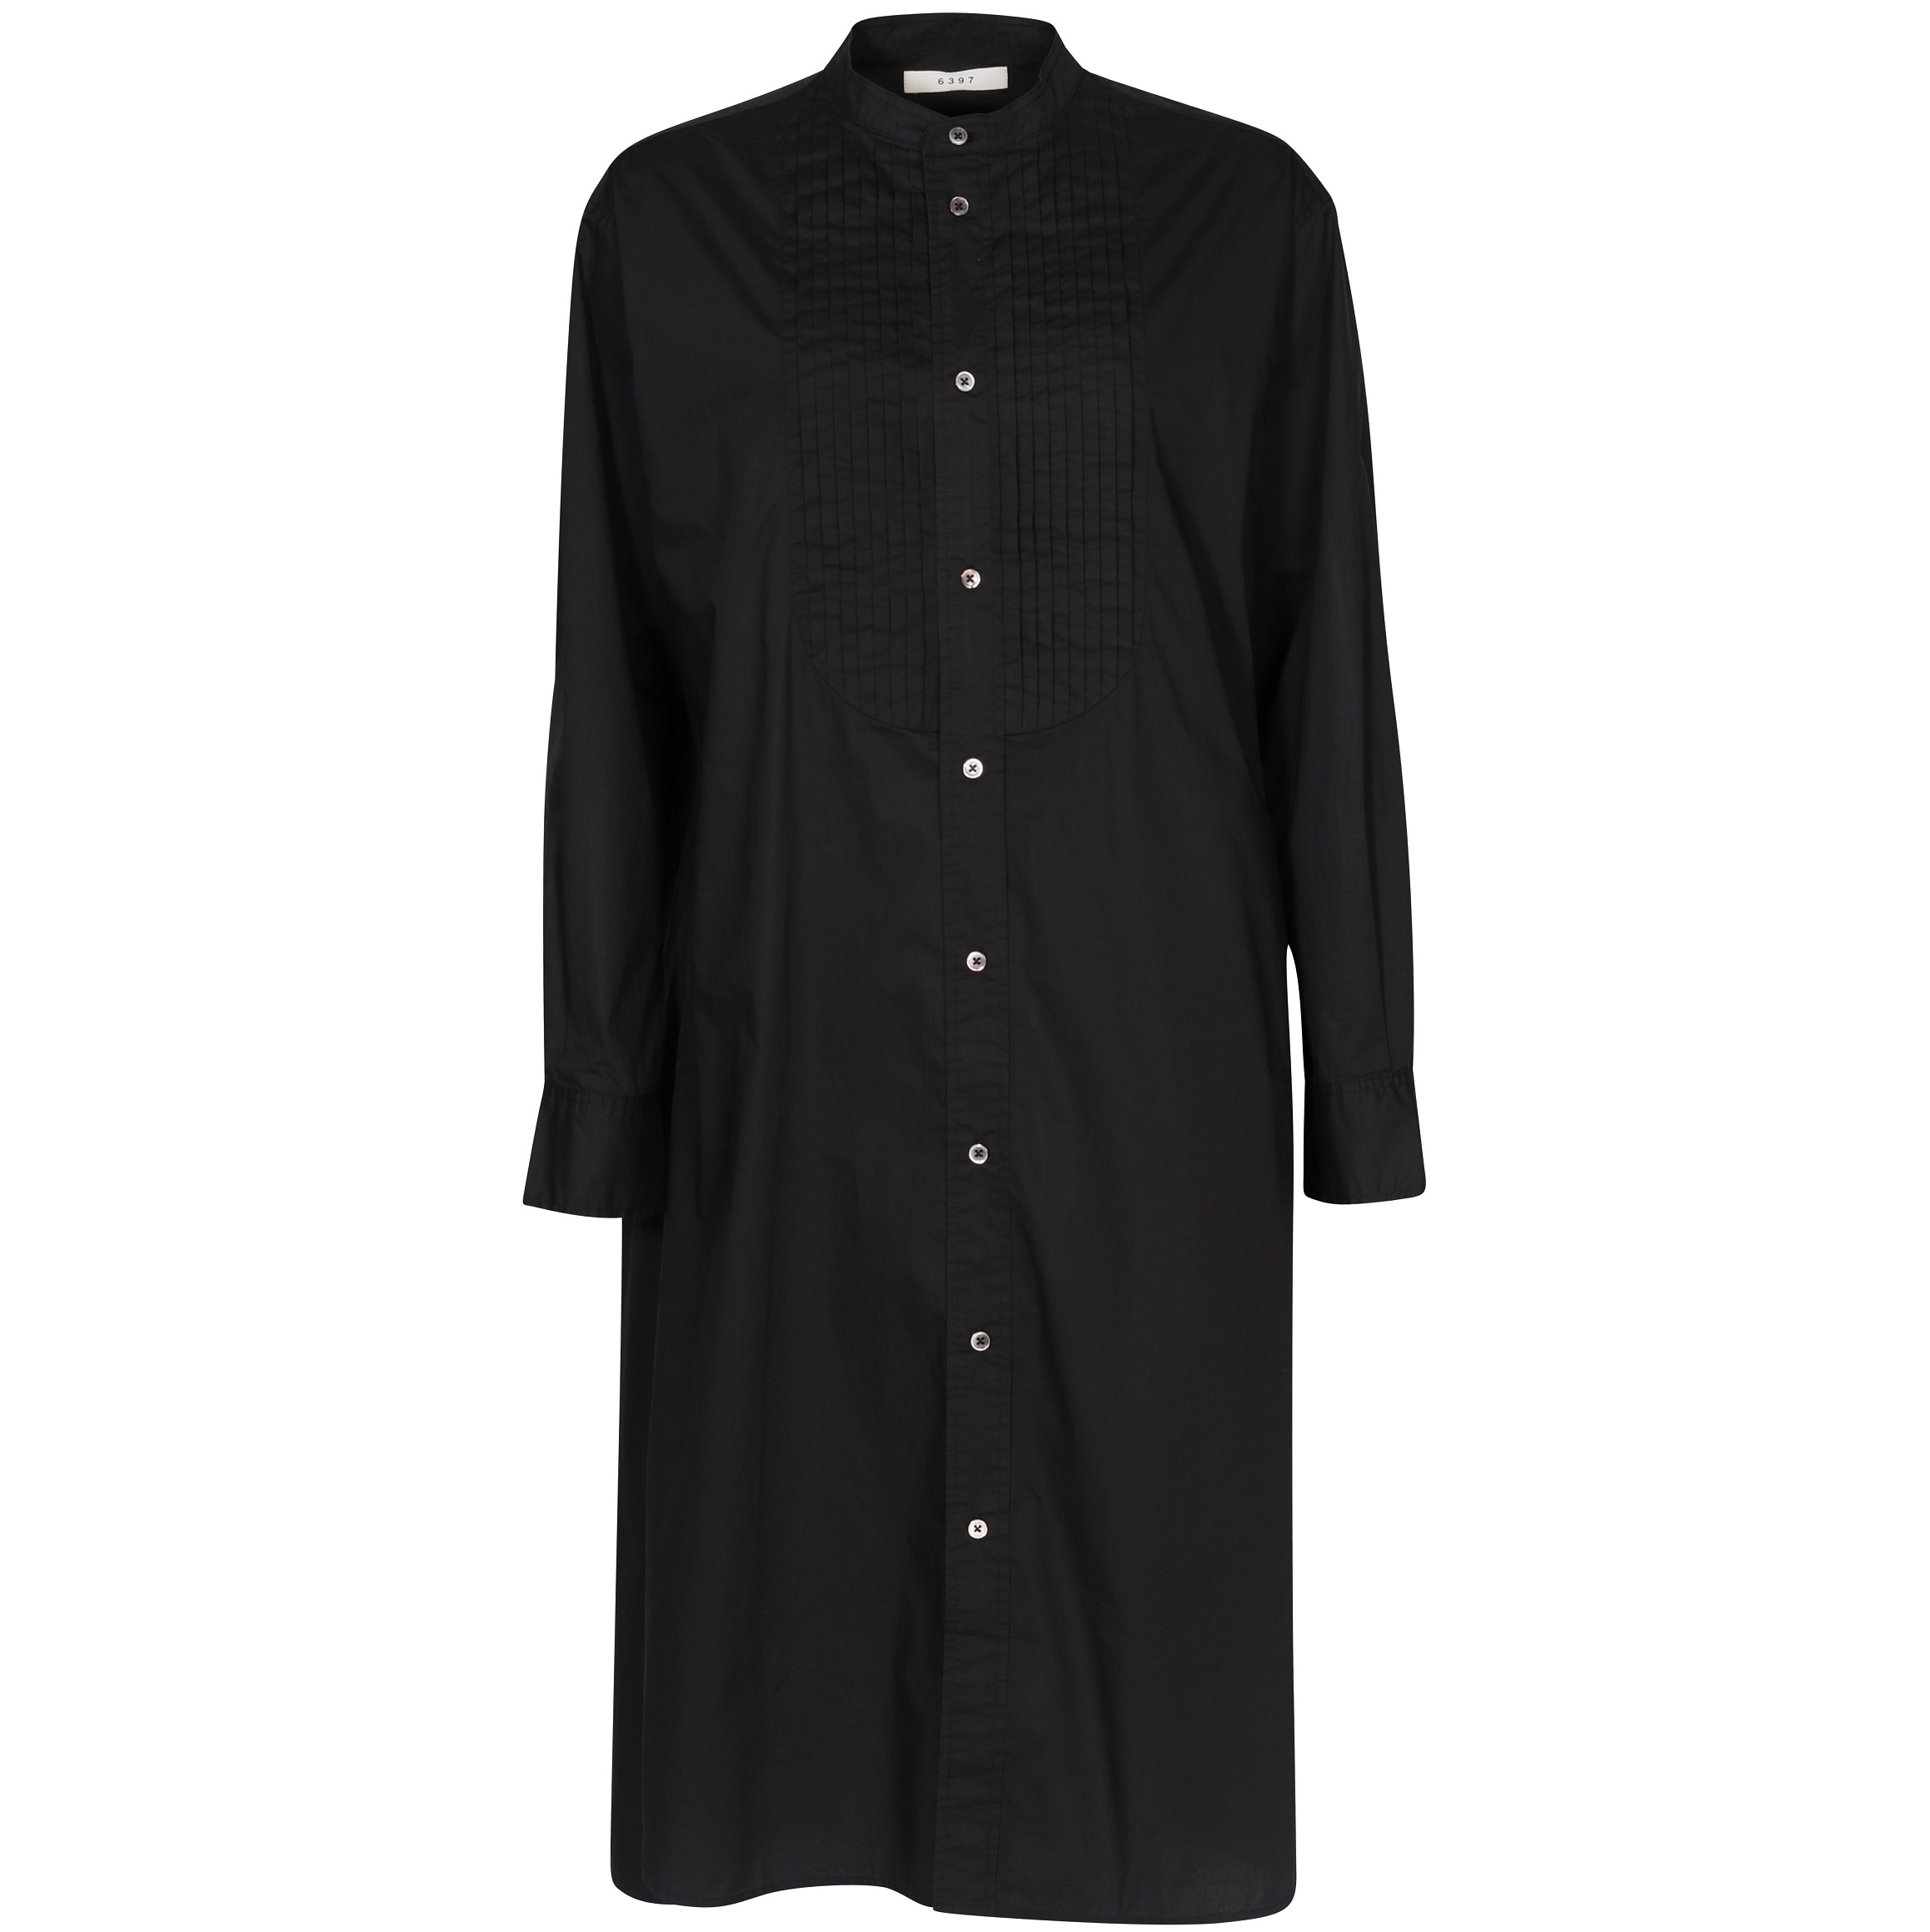 6397 Tuxedo Shirt Dress in Black M